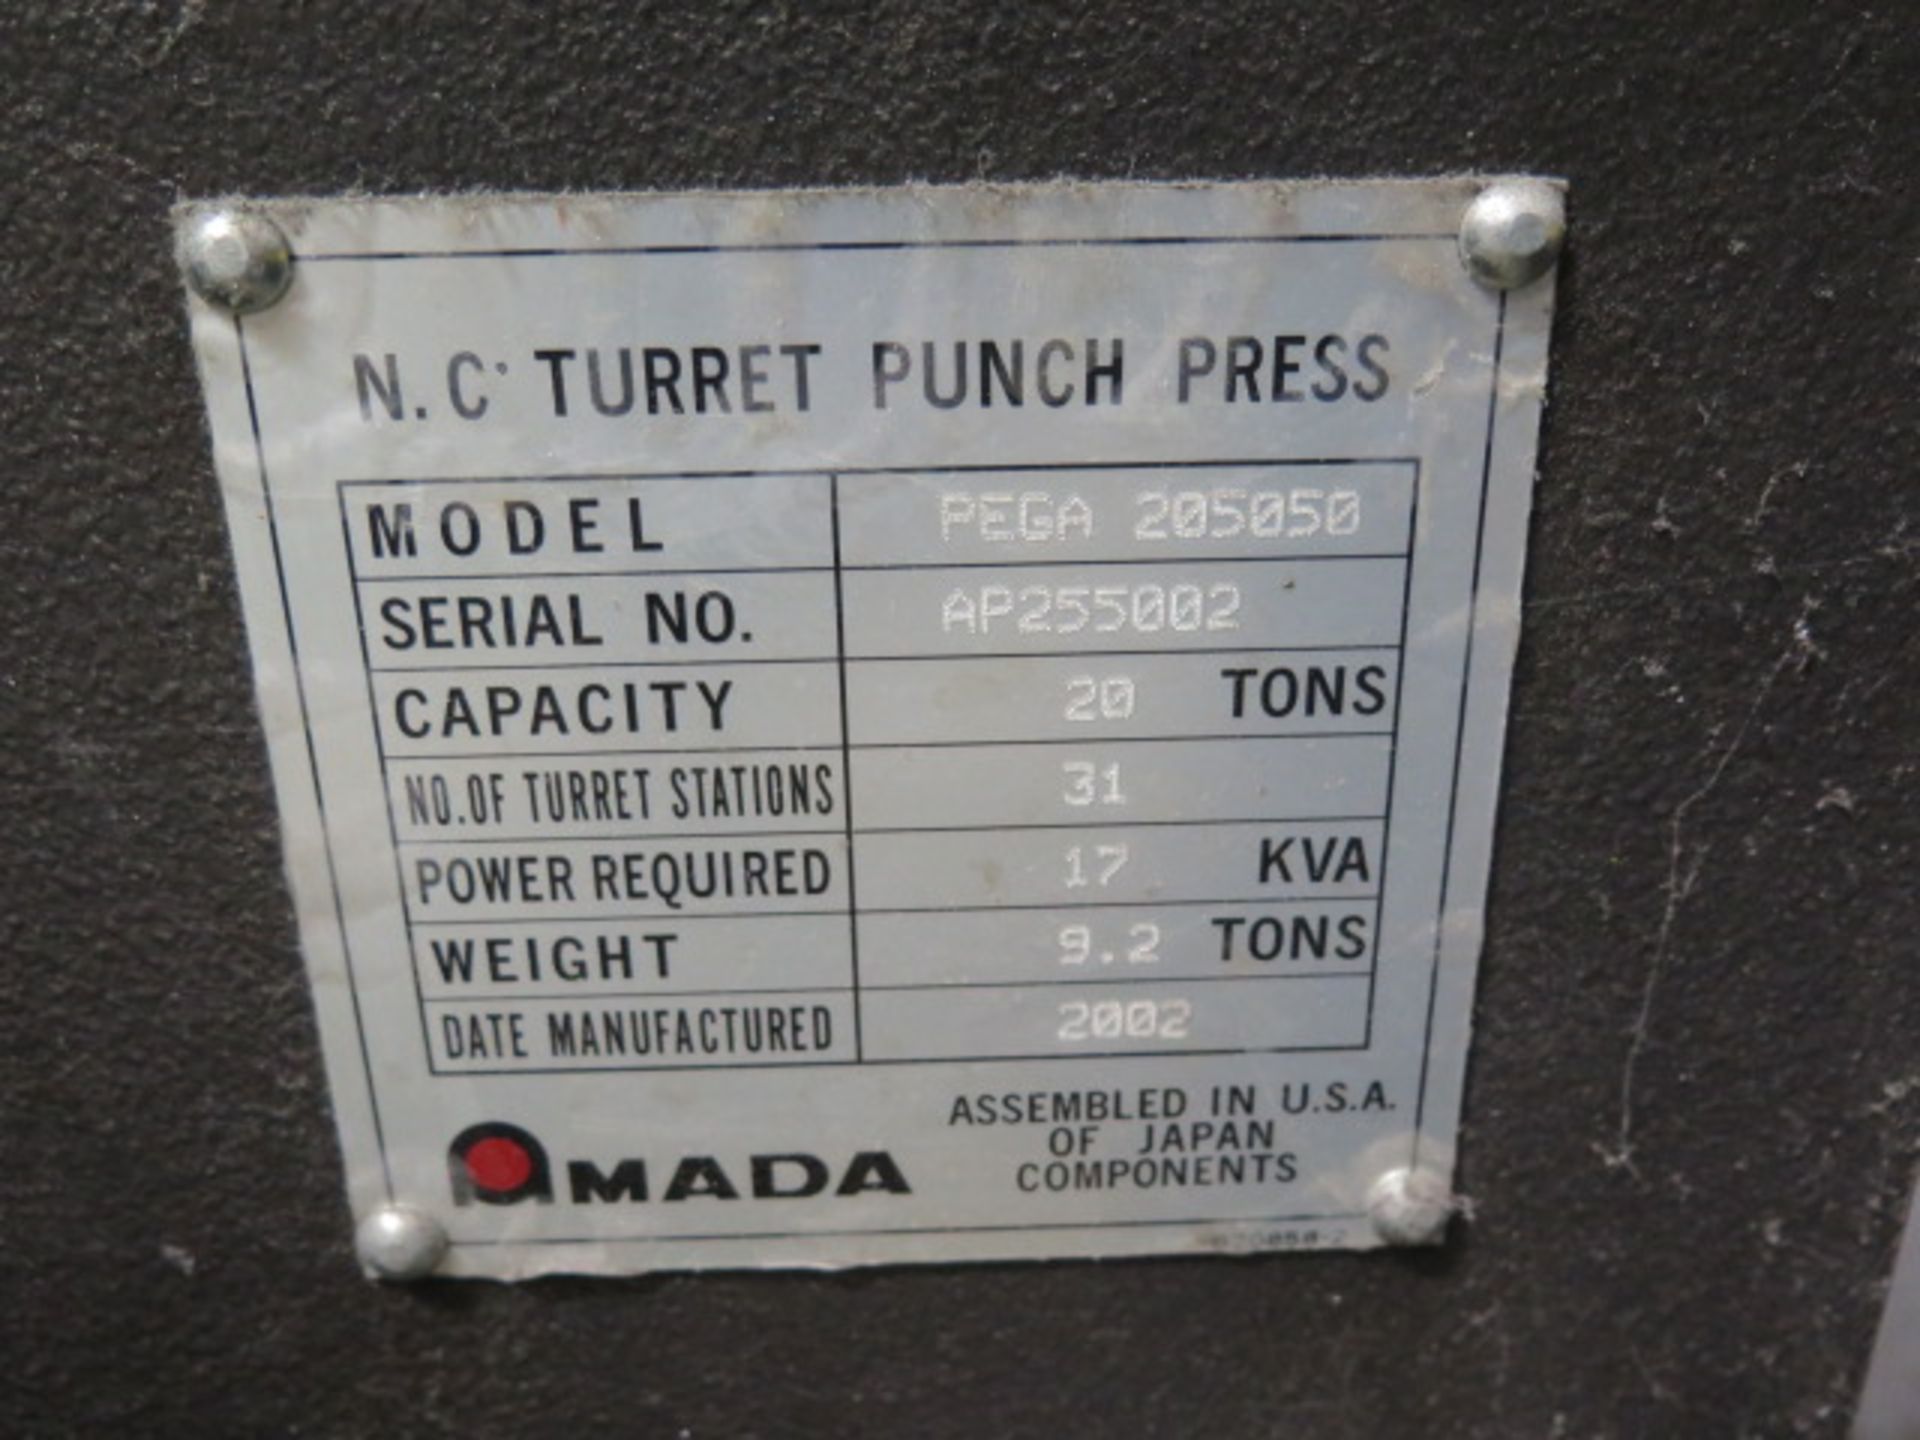 2002 Amada PEGA-255 mdl. PEGA 205050 20 Ton 31-Stat CNC Turret Punch Press s/n AP255002, SOLD AS IS - Image 17 of 17